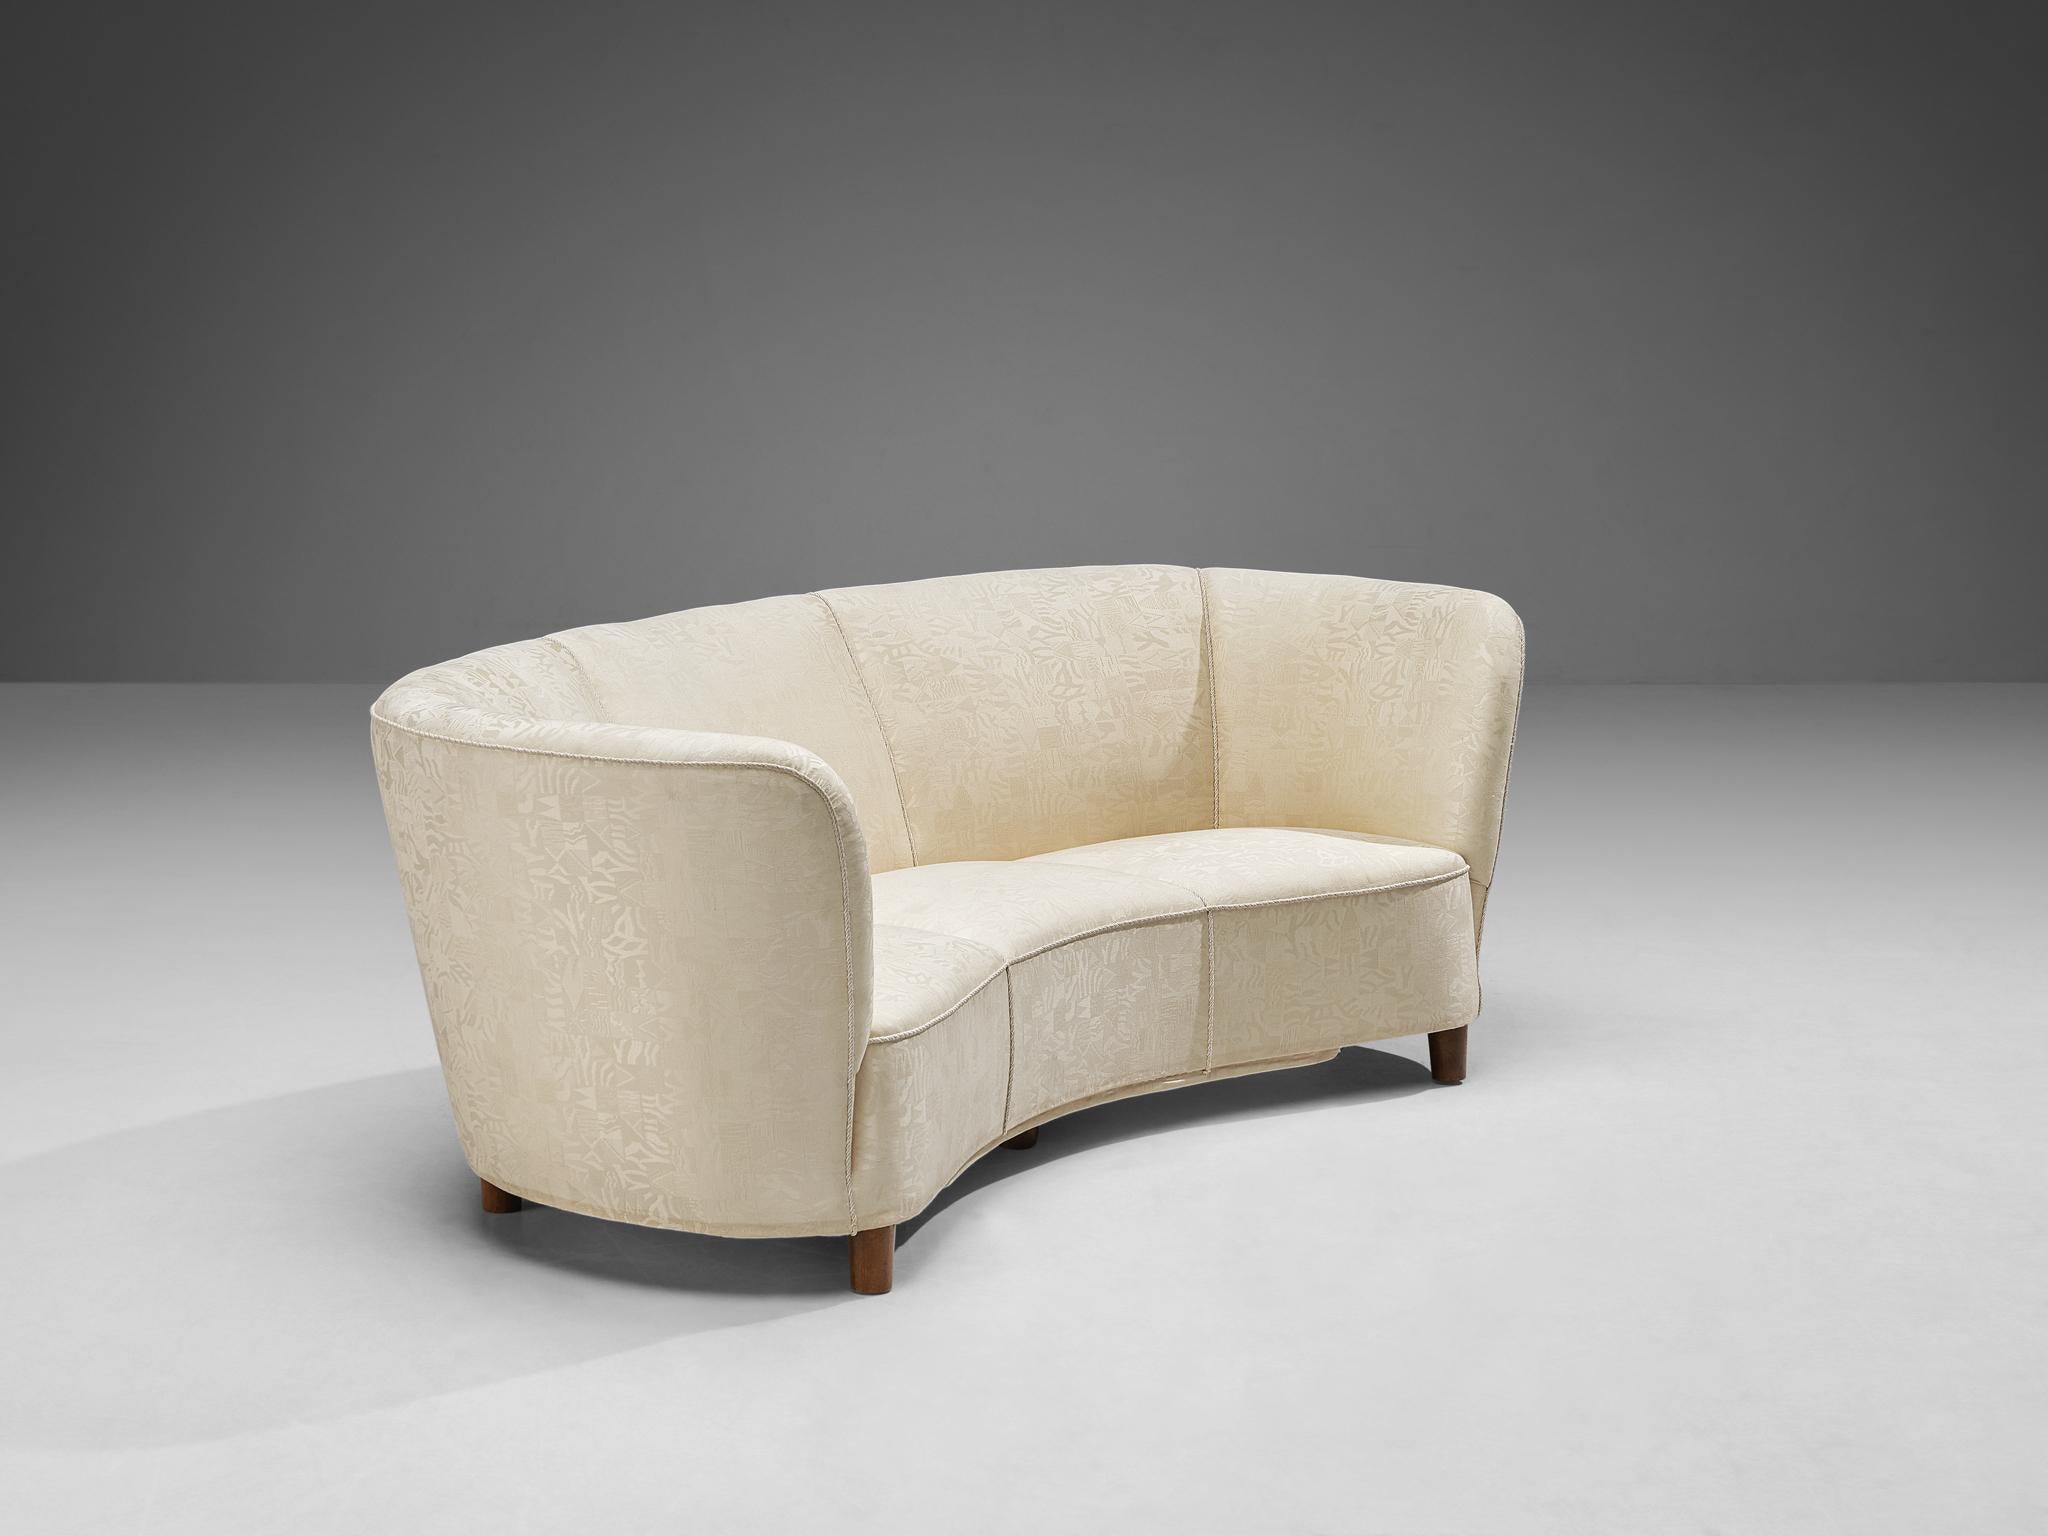 Art Deco Danish Banana Sofa in Patterned Off White Upholstery  For Sale